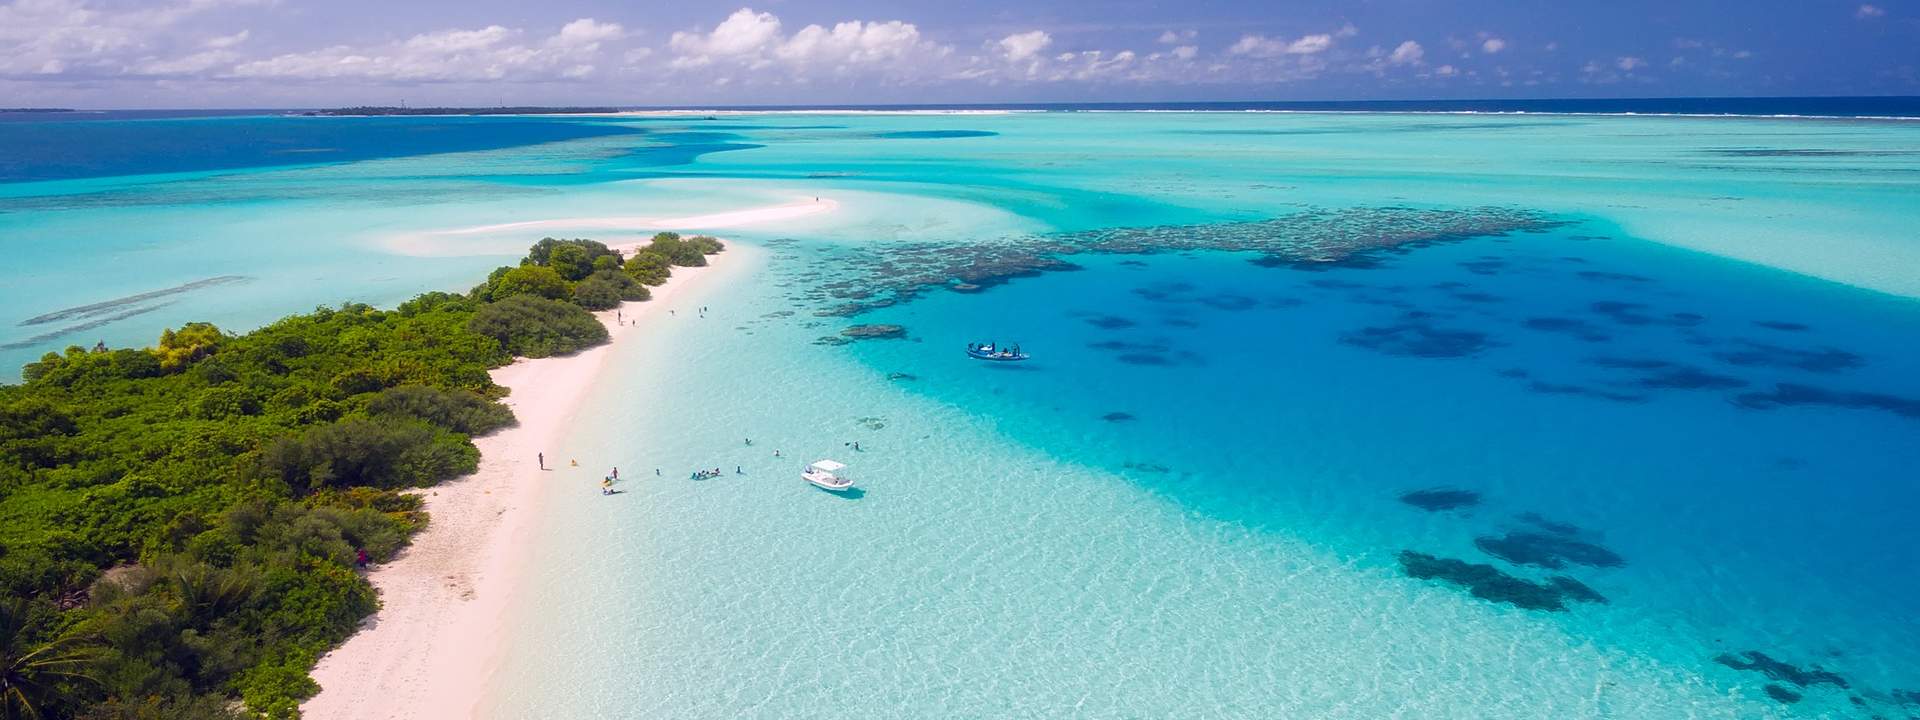 Explorez le paradis tropical des Maldives en catamaran